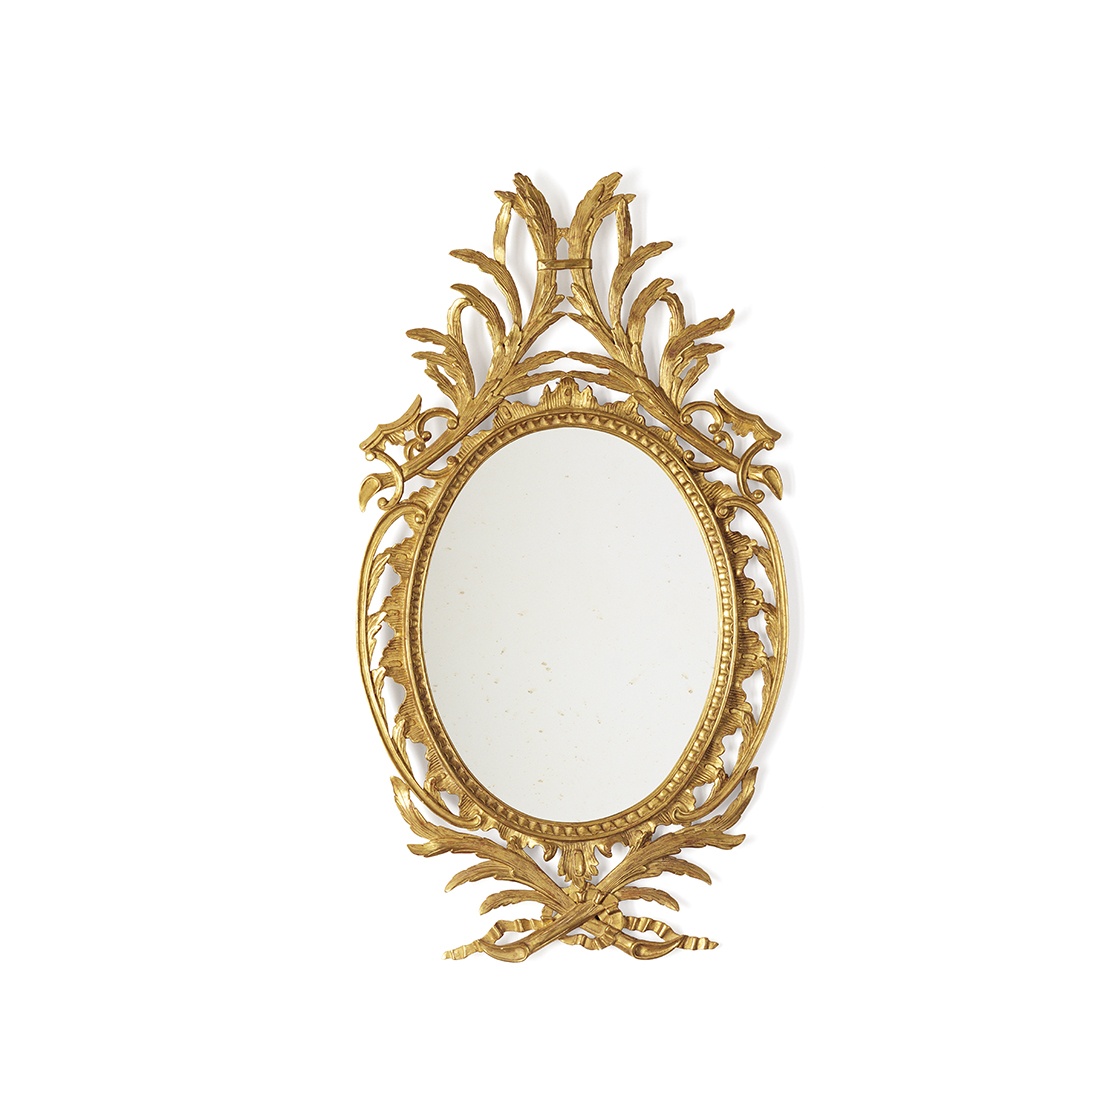 Olympus mirror in Venice gold - Beaumont & Fletcher